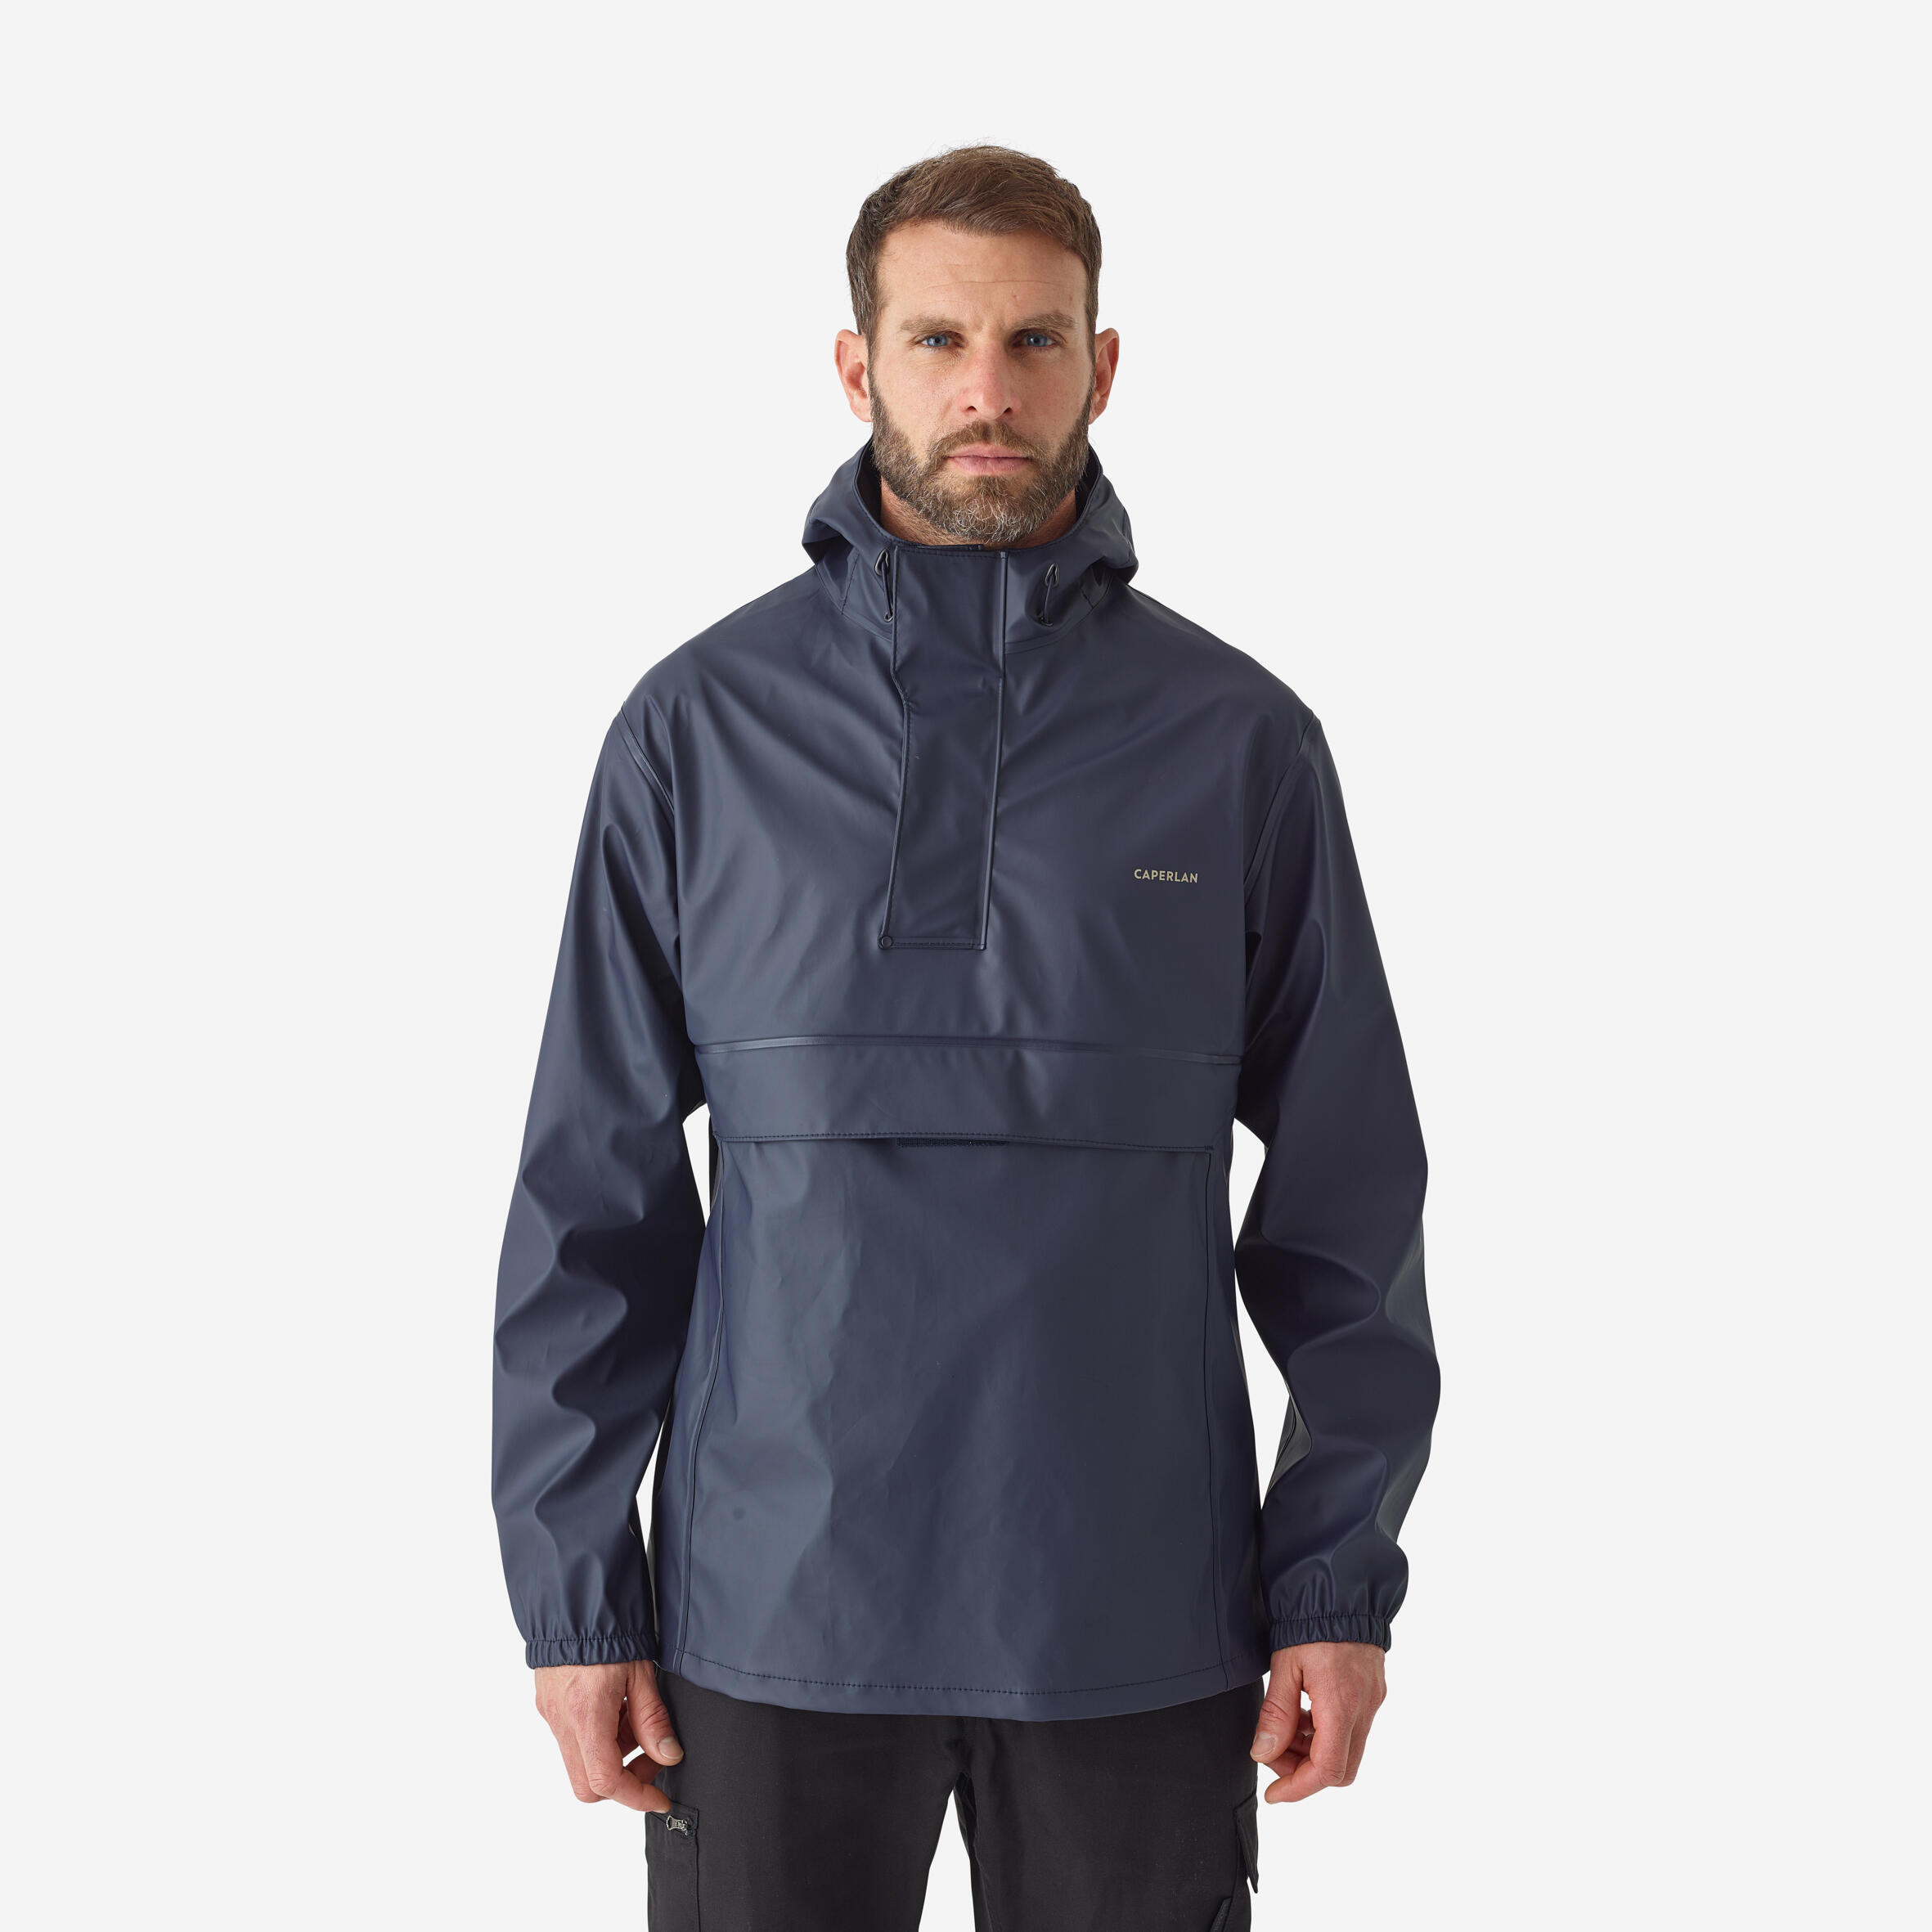 Fishing waterproof poncho/jacket - FP 500 blue CAPERLAN